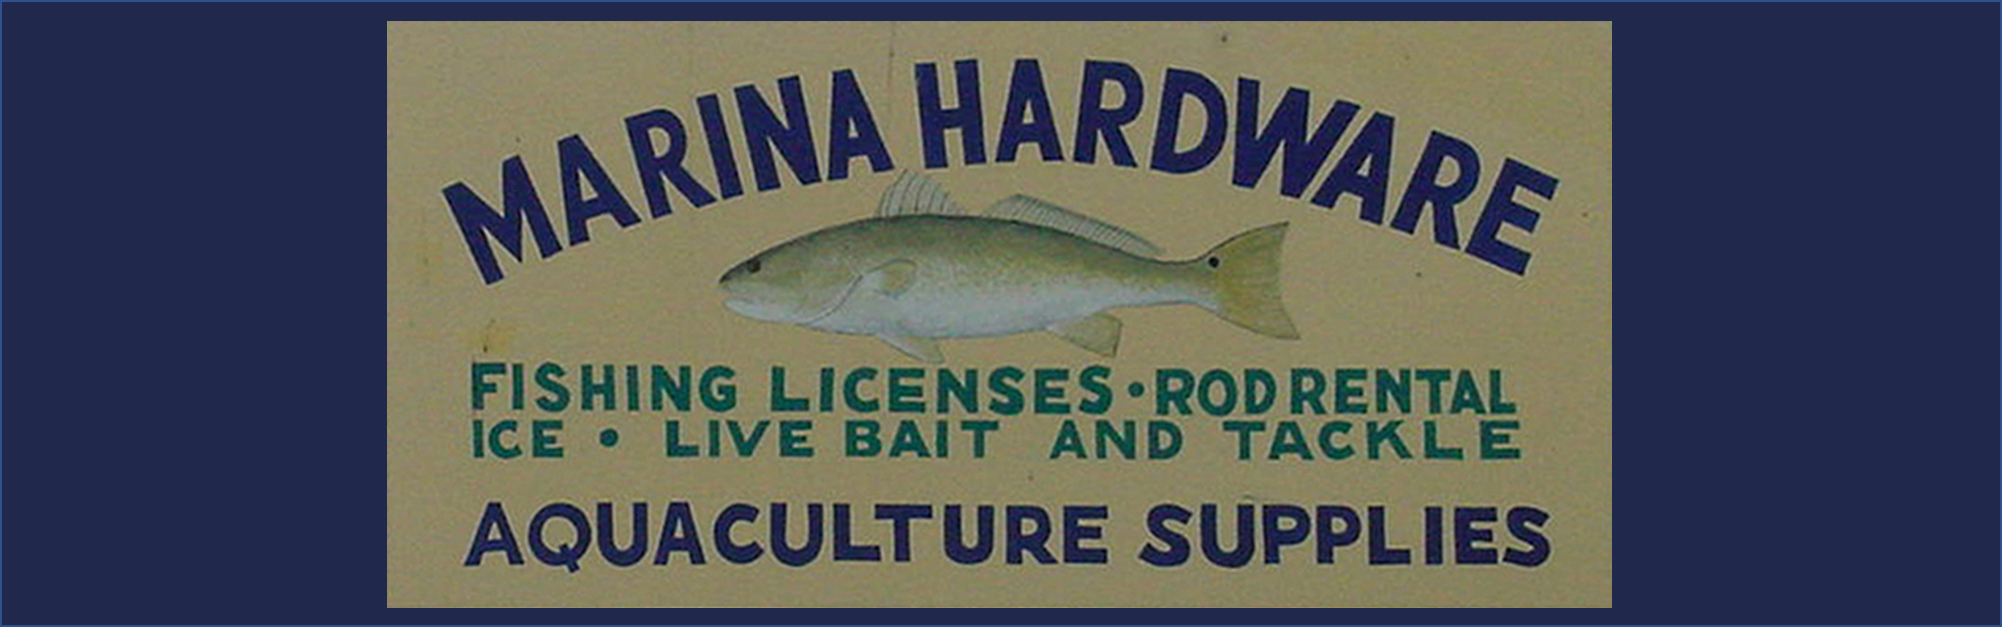 Suppliers - Florida Shellfish Aquaculture Online Resource Guide